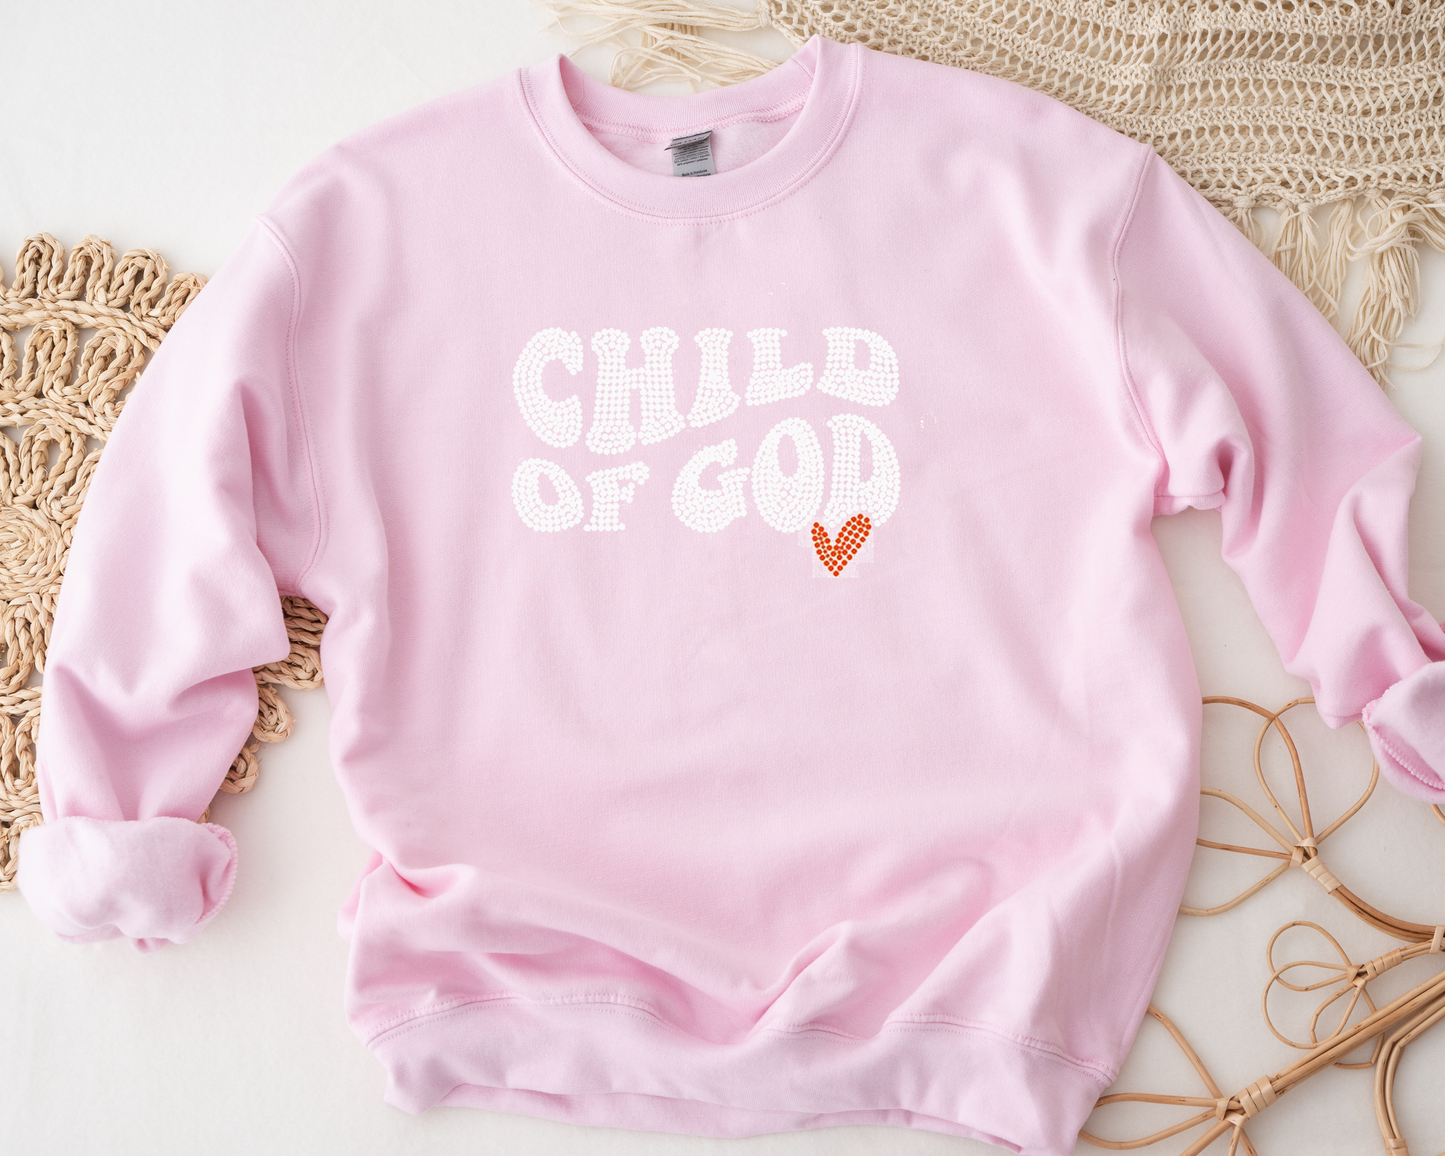 Child of God Rhinestone hoodies/sweatshirts